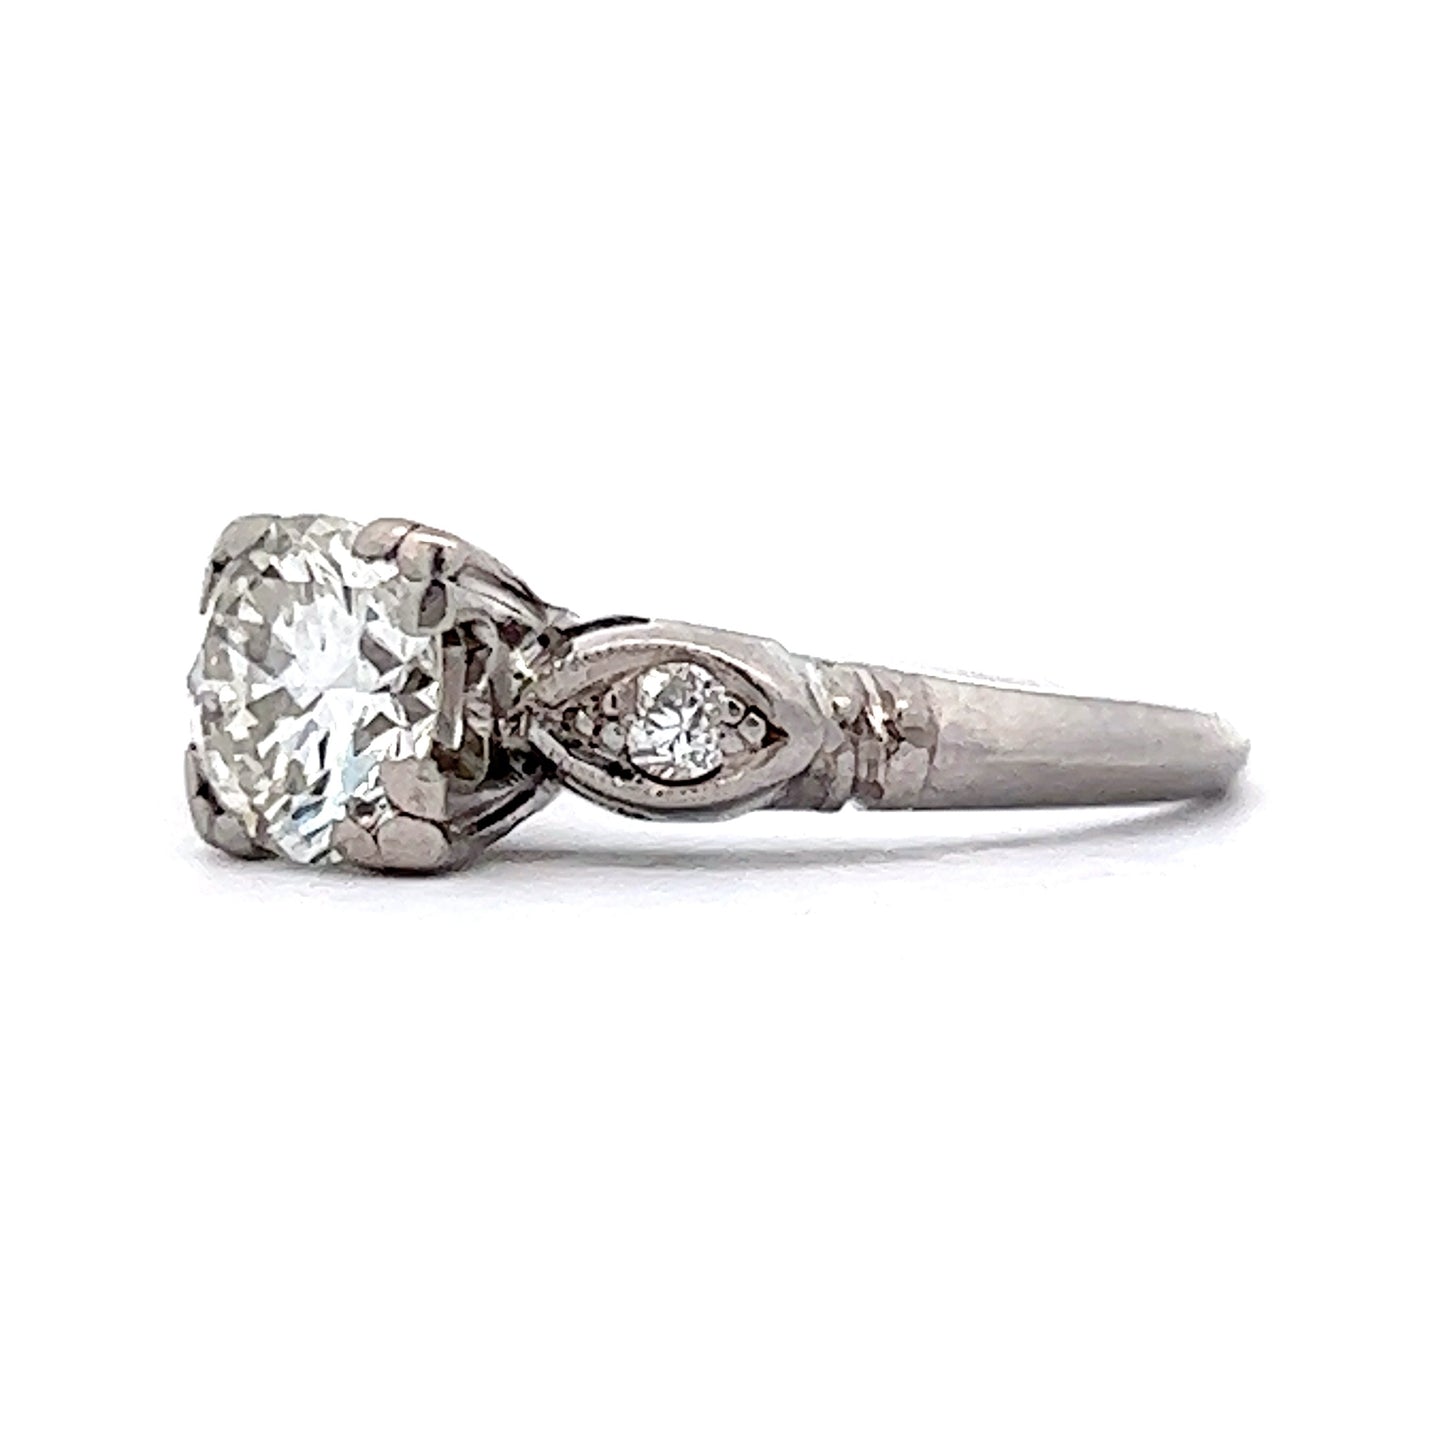 Vintage Three Stone Diamond Engagement Ring in Platinum